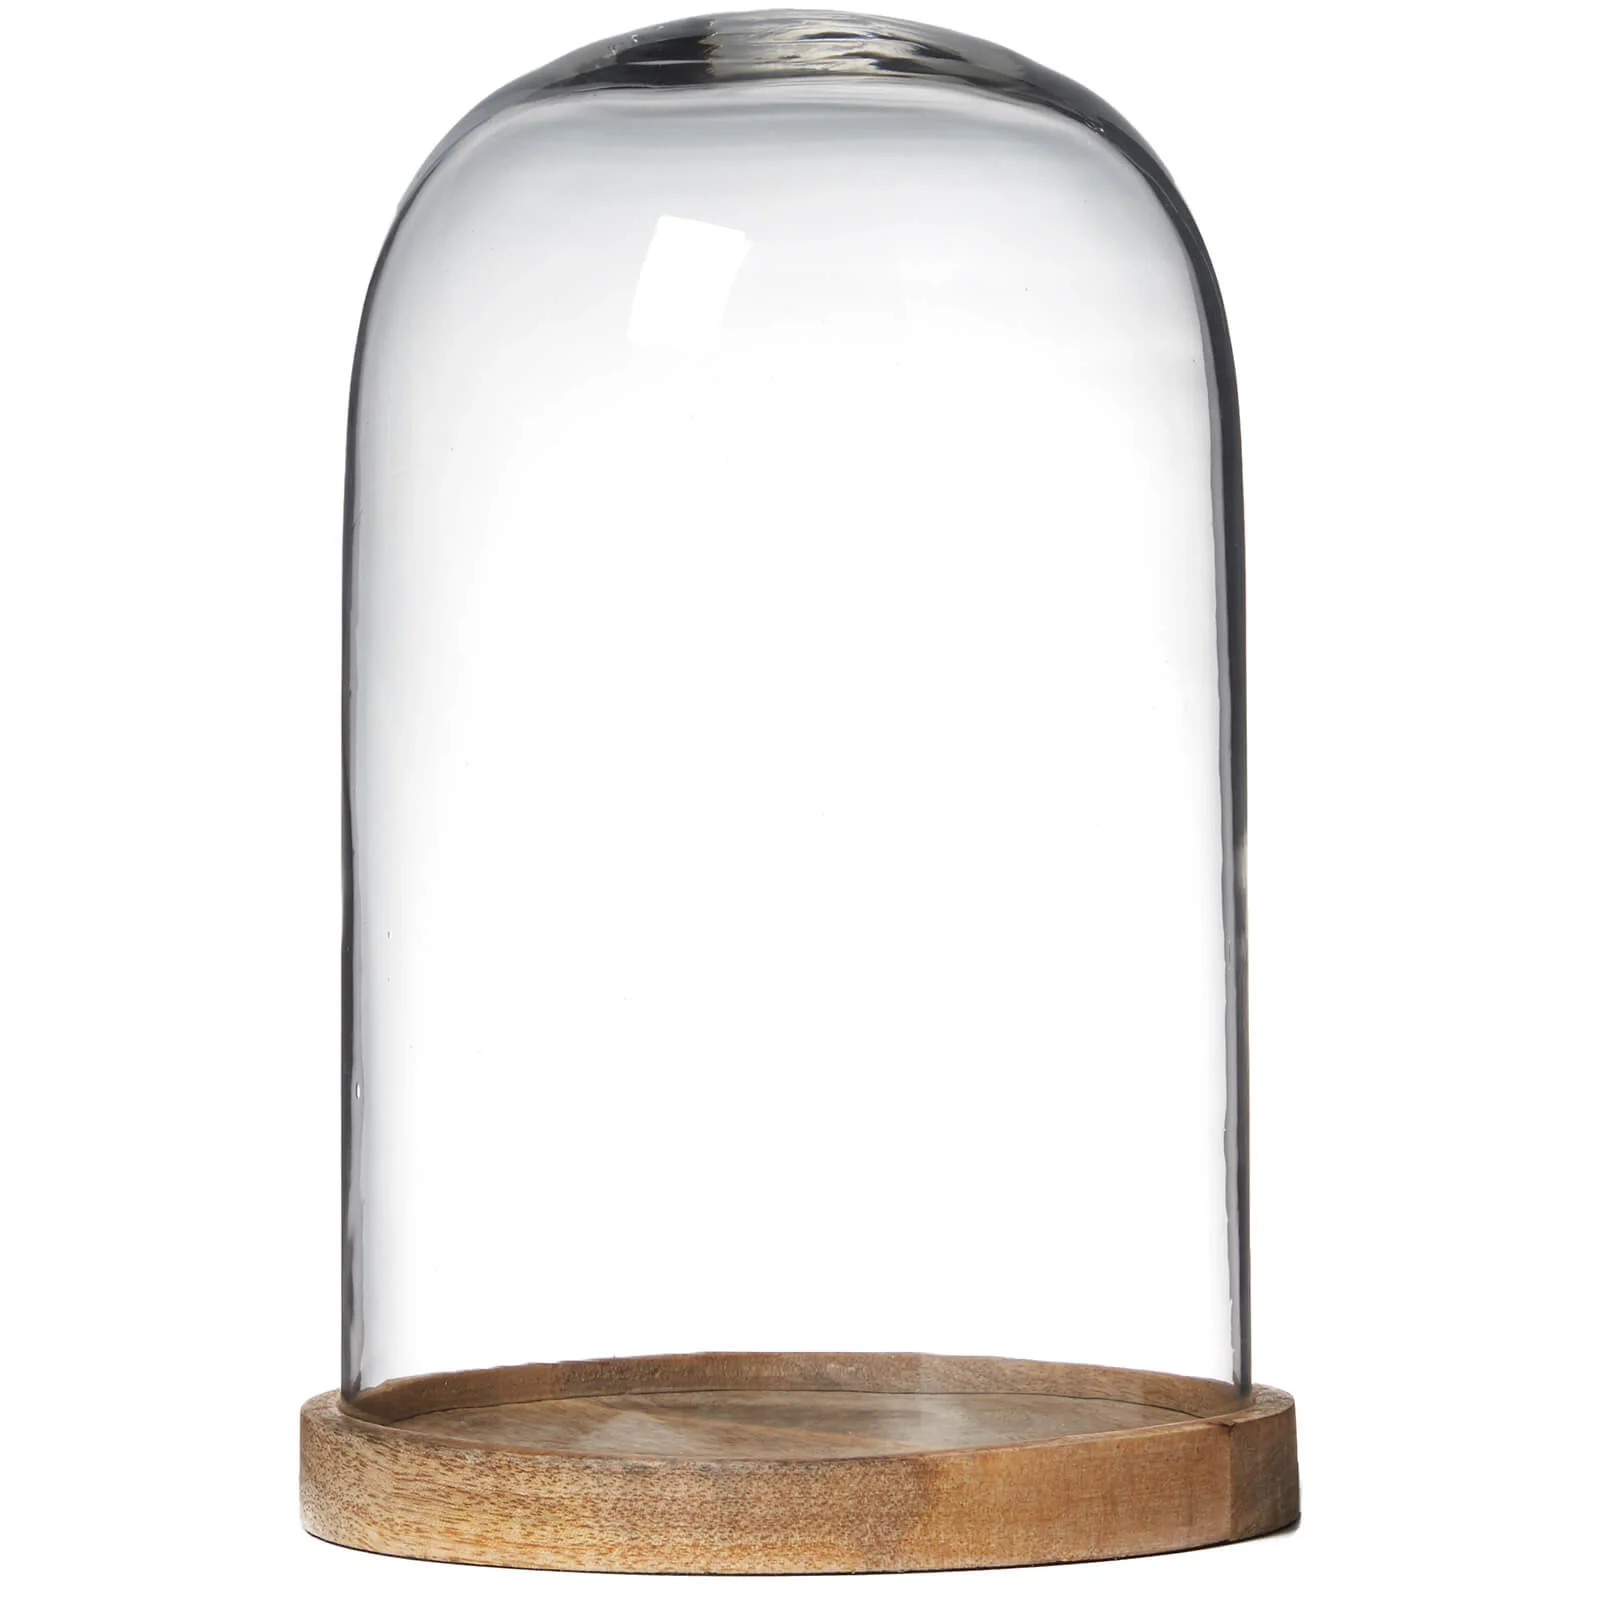 Nkuku Recycled Inu Decorative Medium Glass Dome Image 1